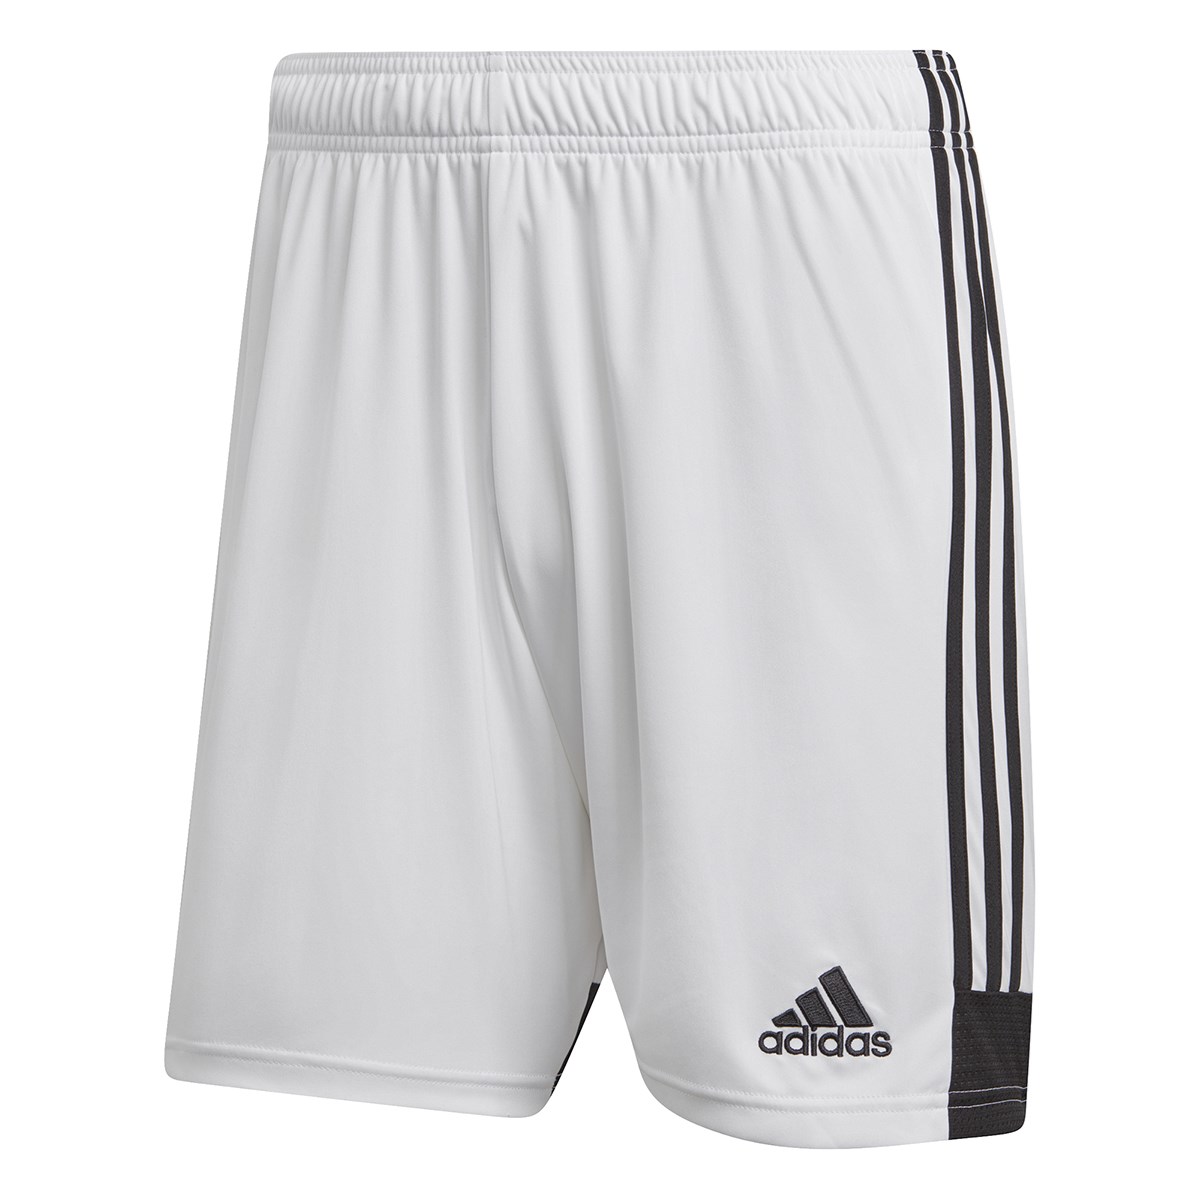 Short Adidas Tastigo 19 Masculino - Branco e Preto - Esporte Legal